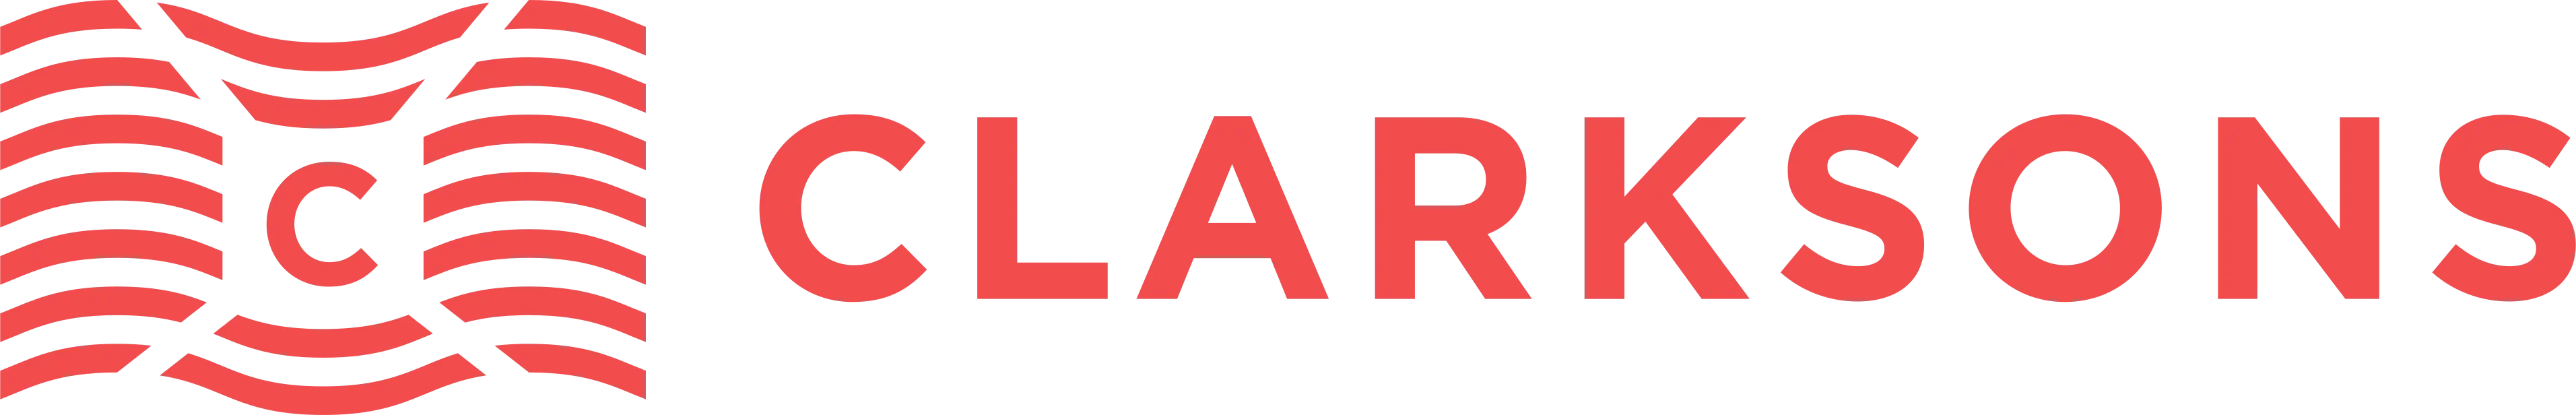 Clarkson client logo